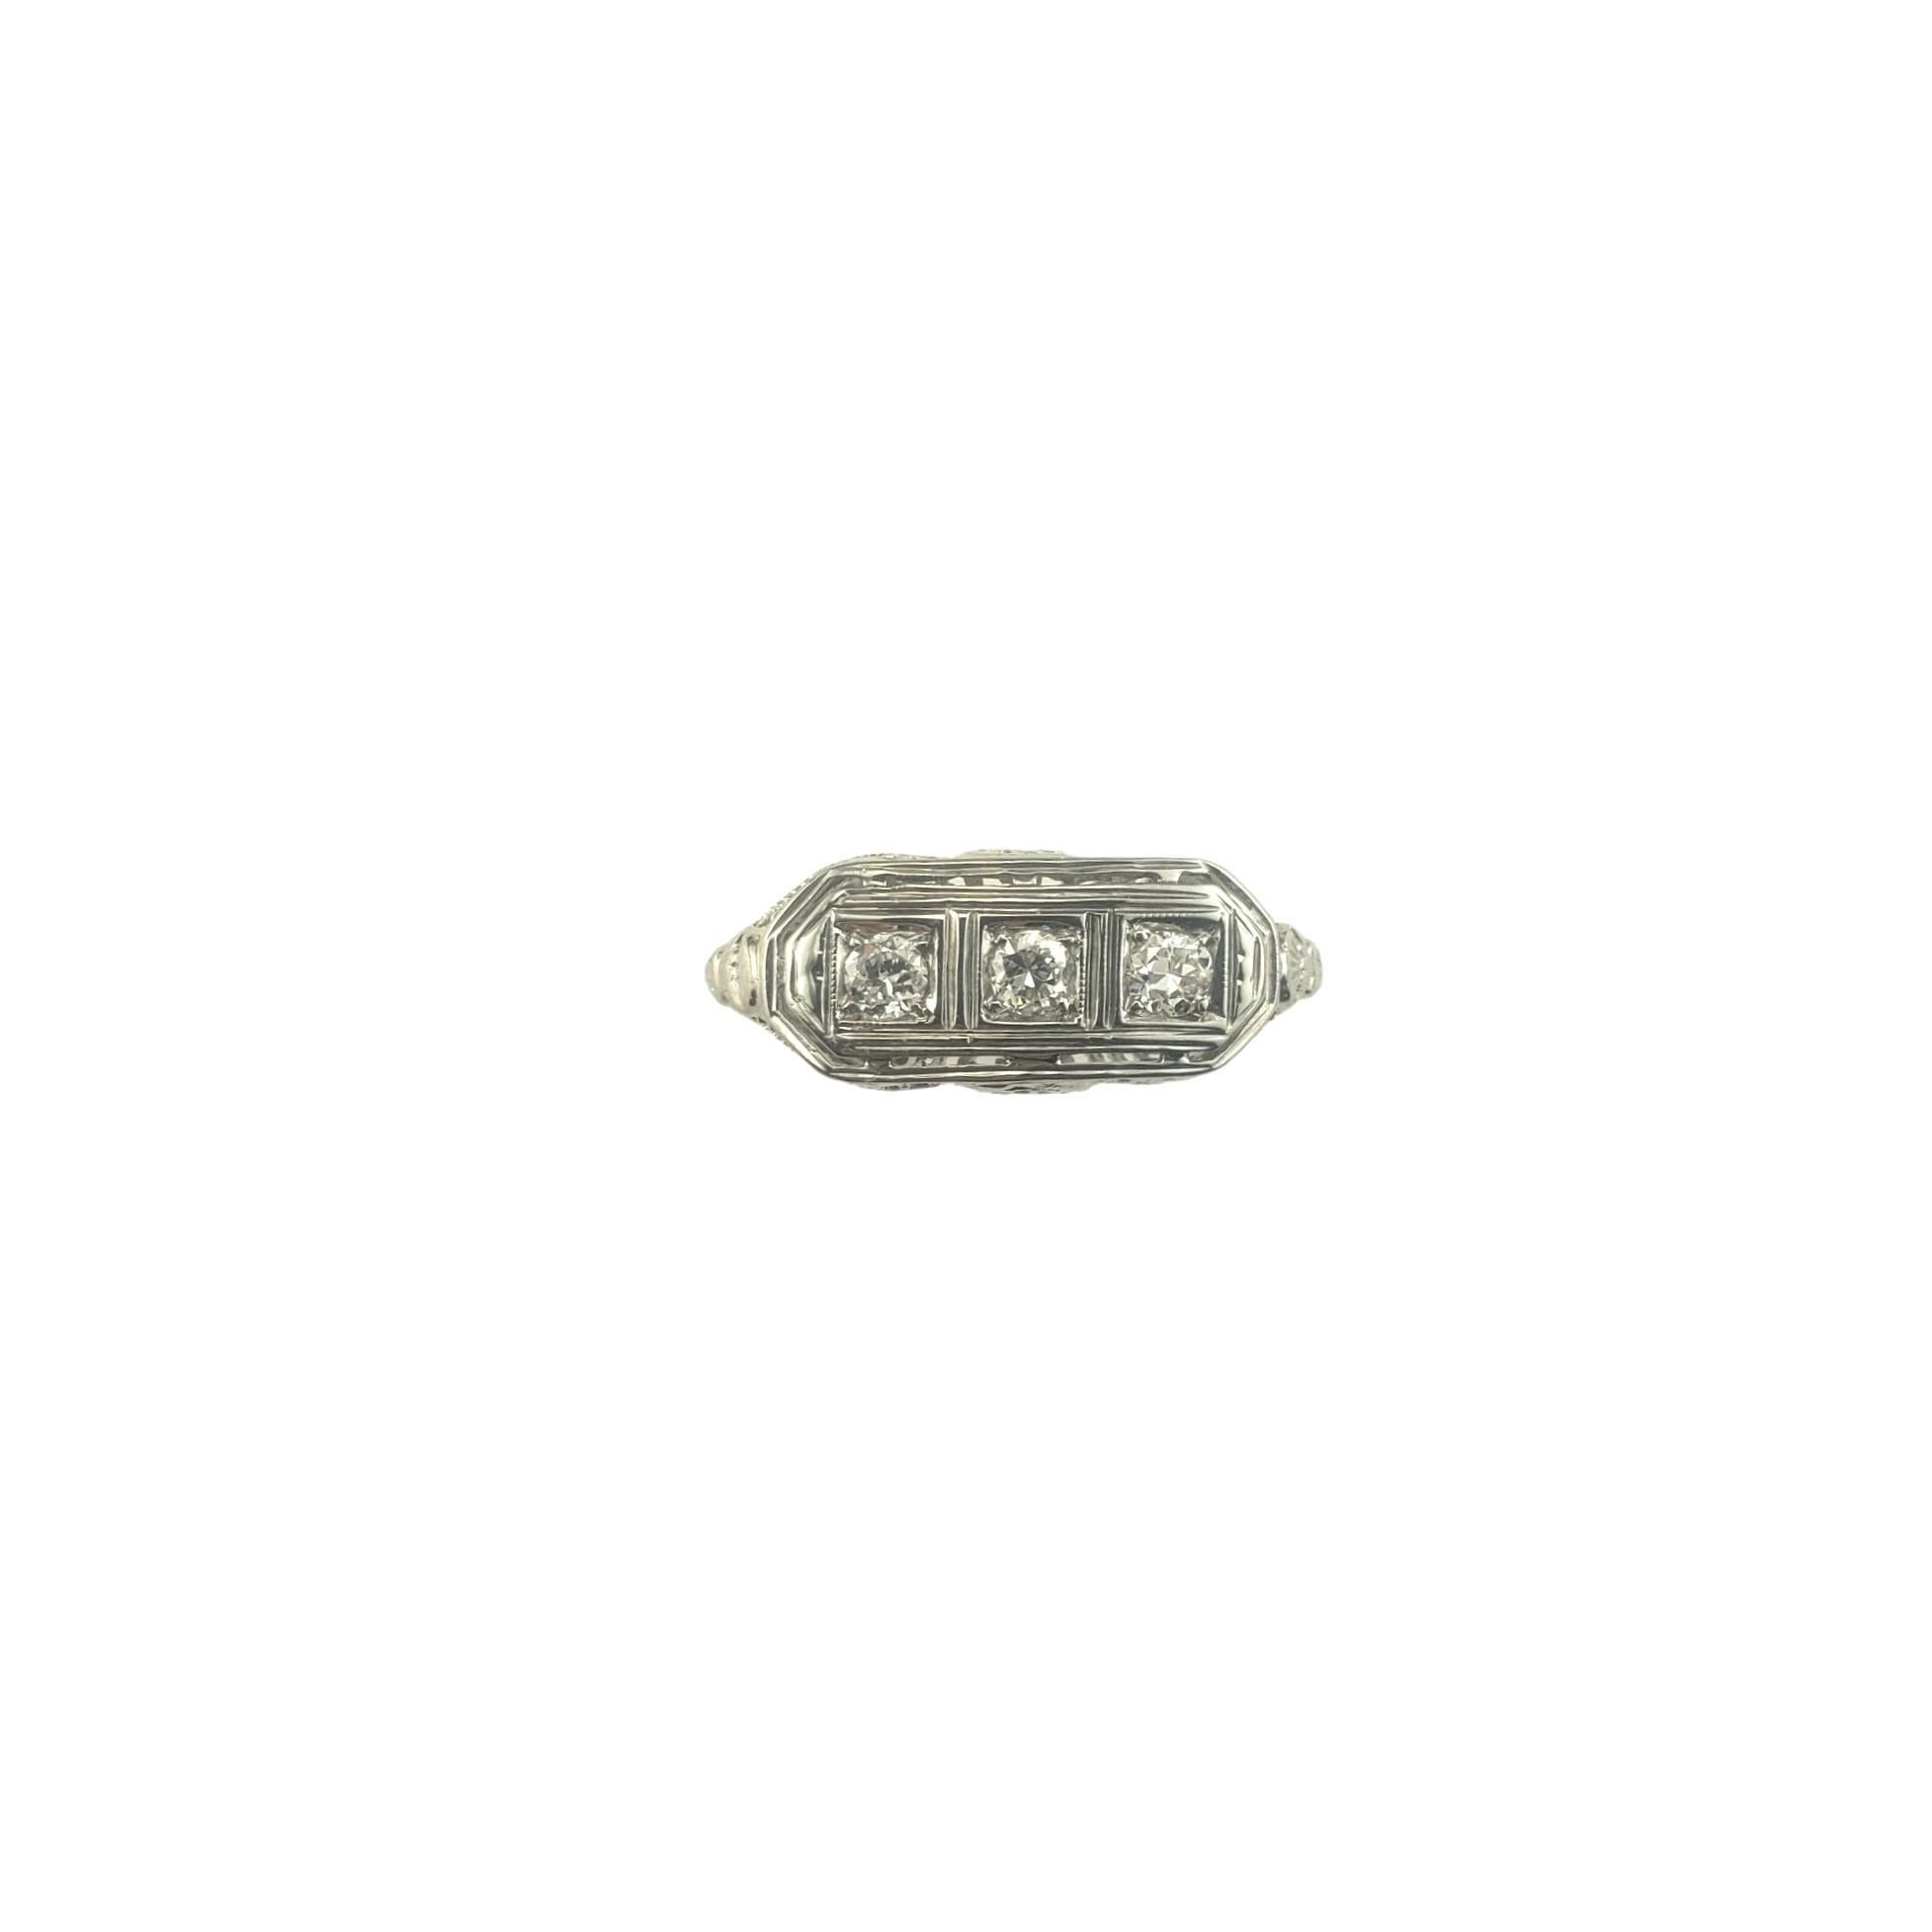 18 Karat White Gold Filigree and Diamond Ring Size 5.5-5.75 #16754 For Sale